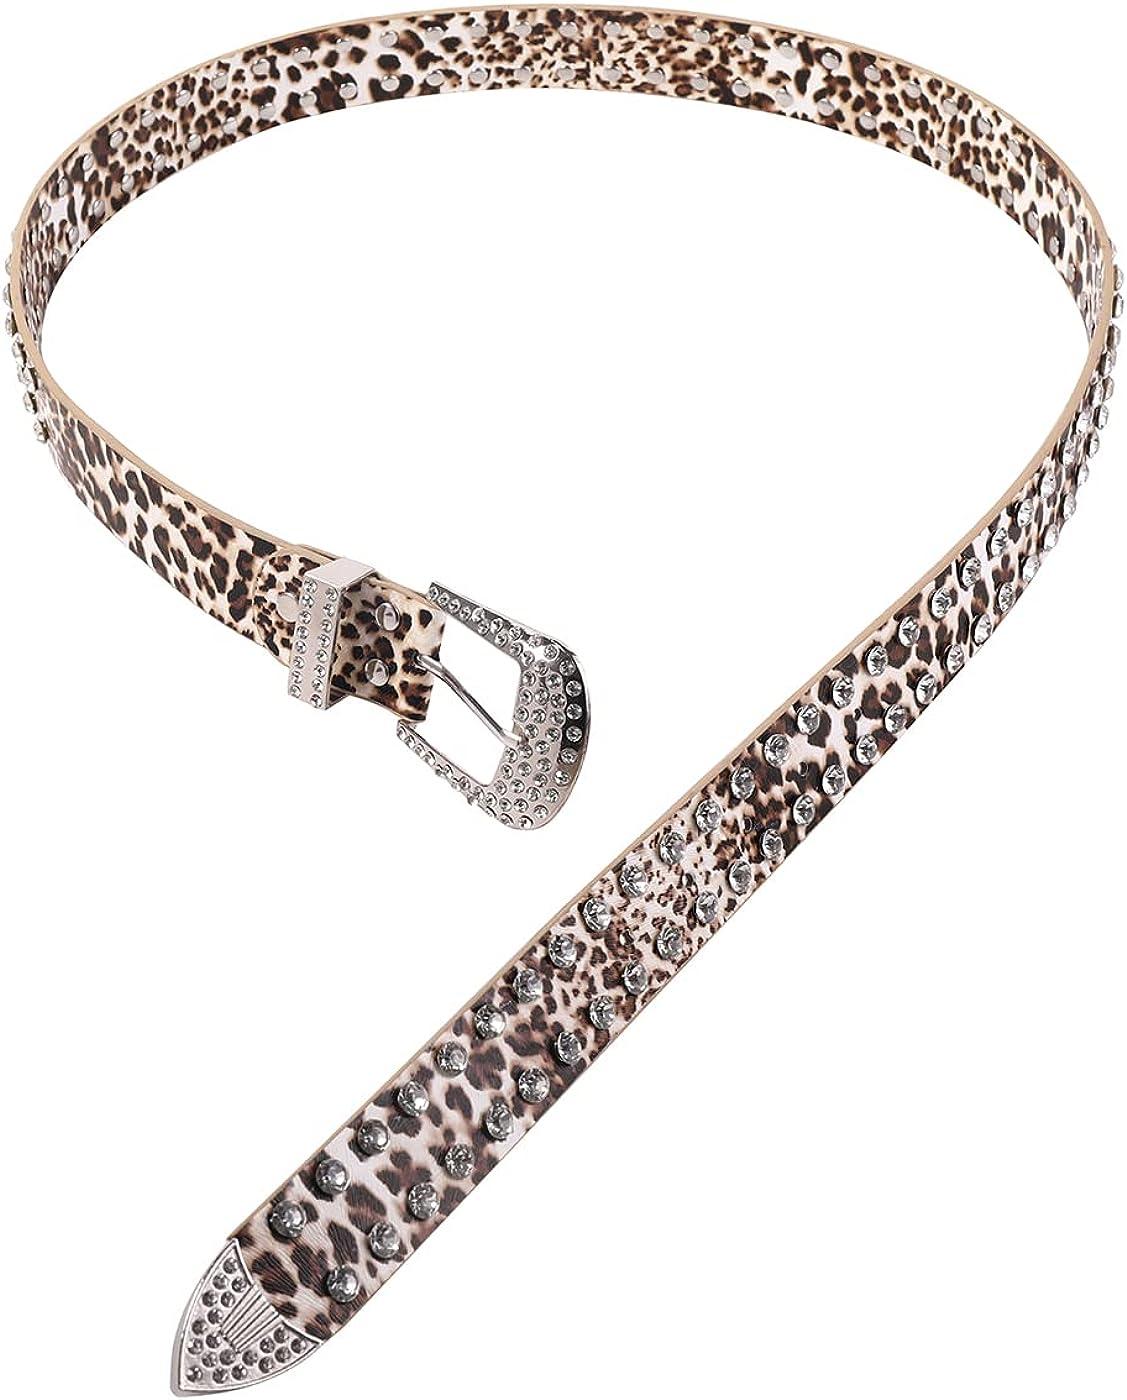 Womens Leopard Print Leather Belts for Women, Waist Belts Designer